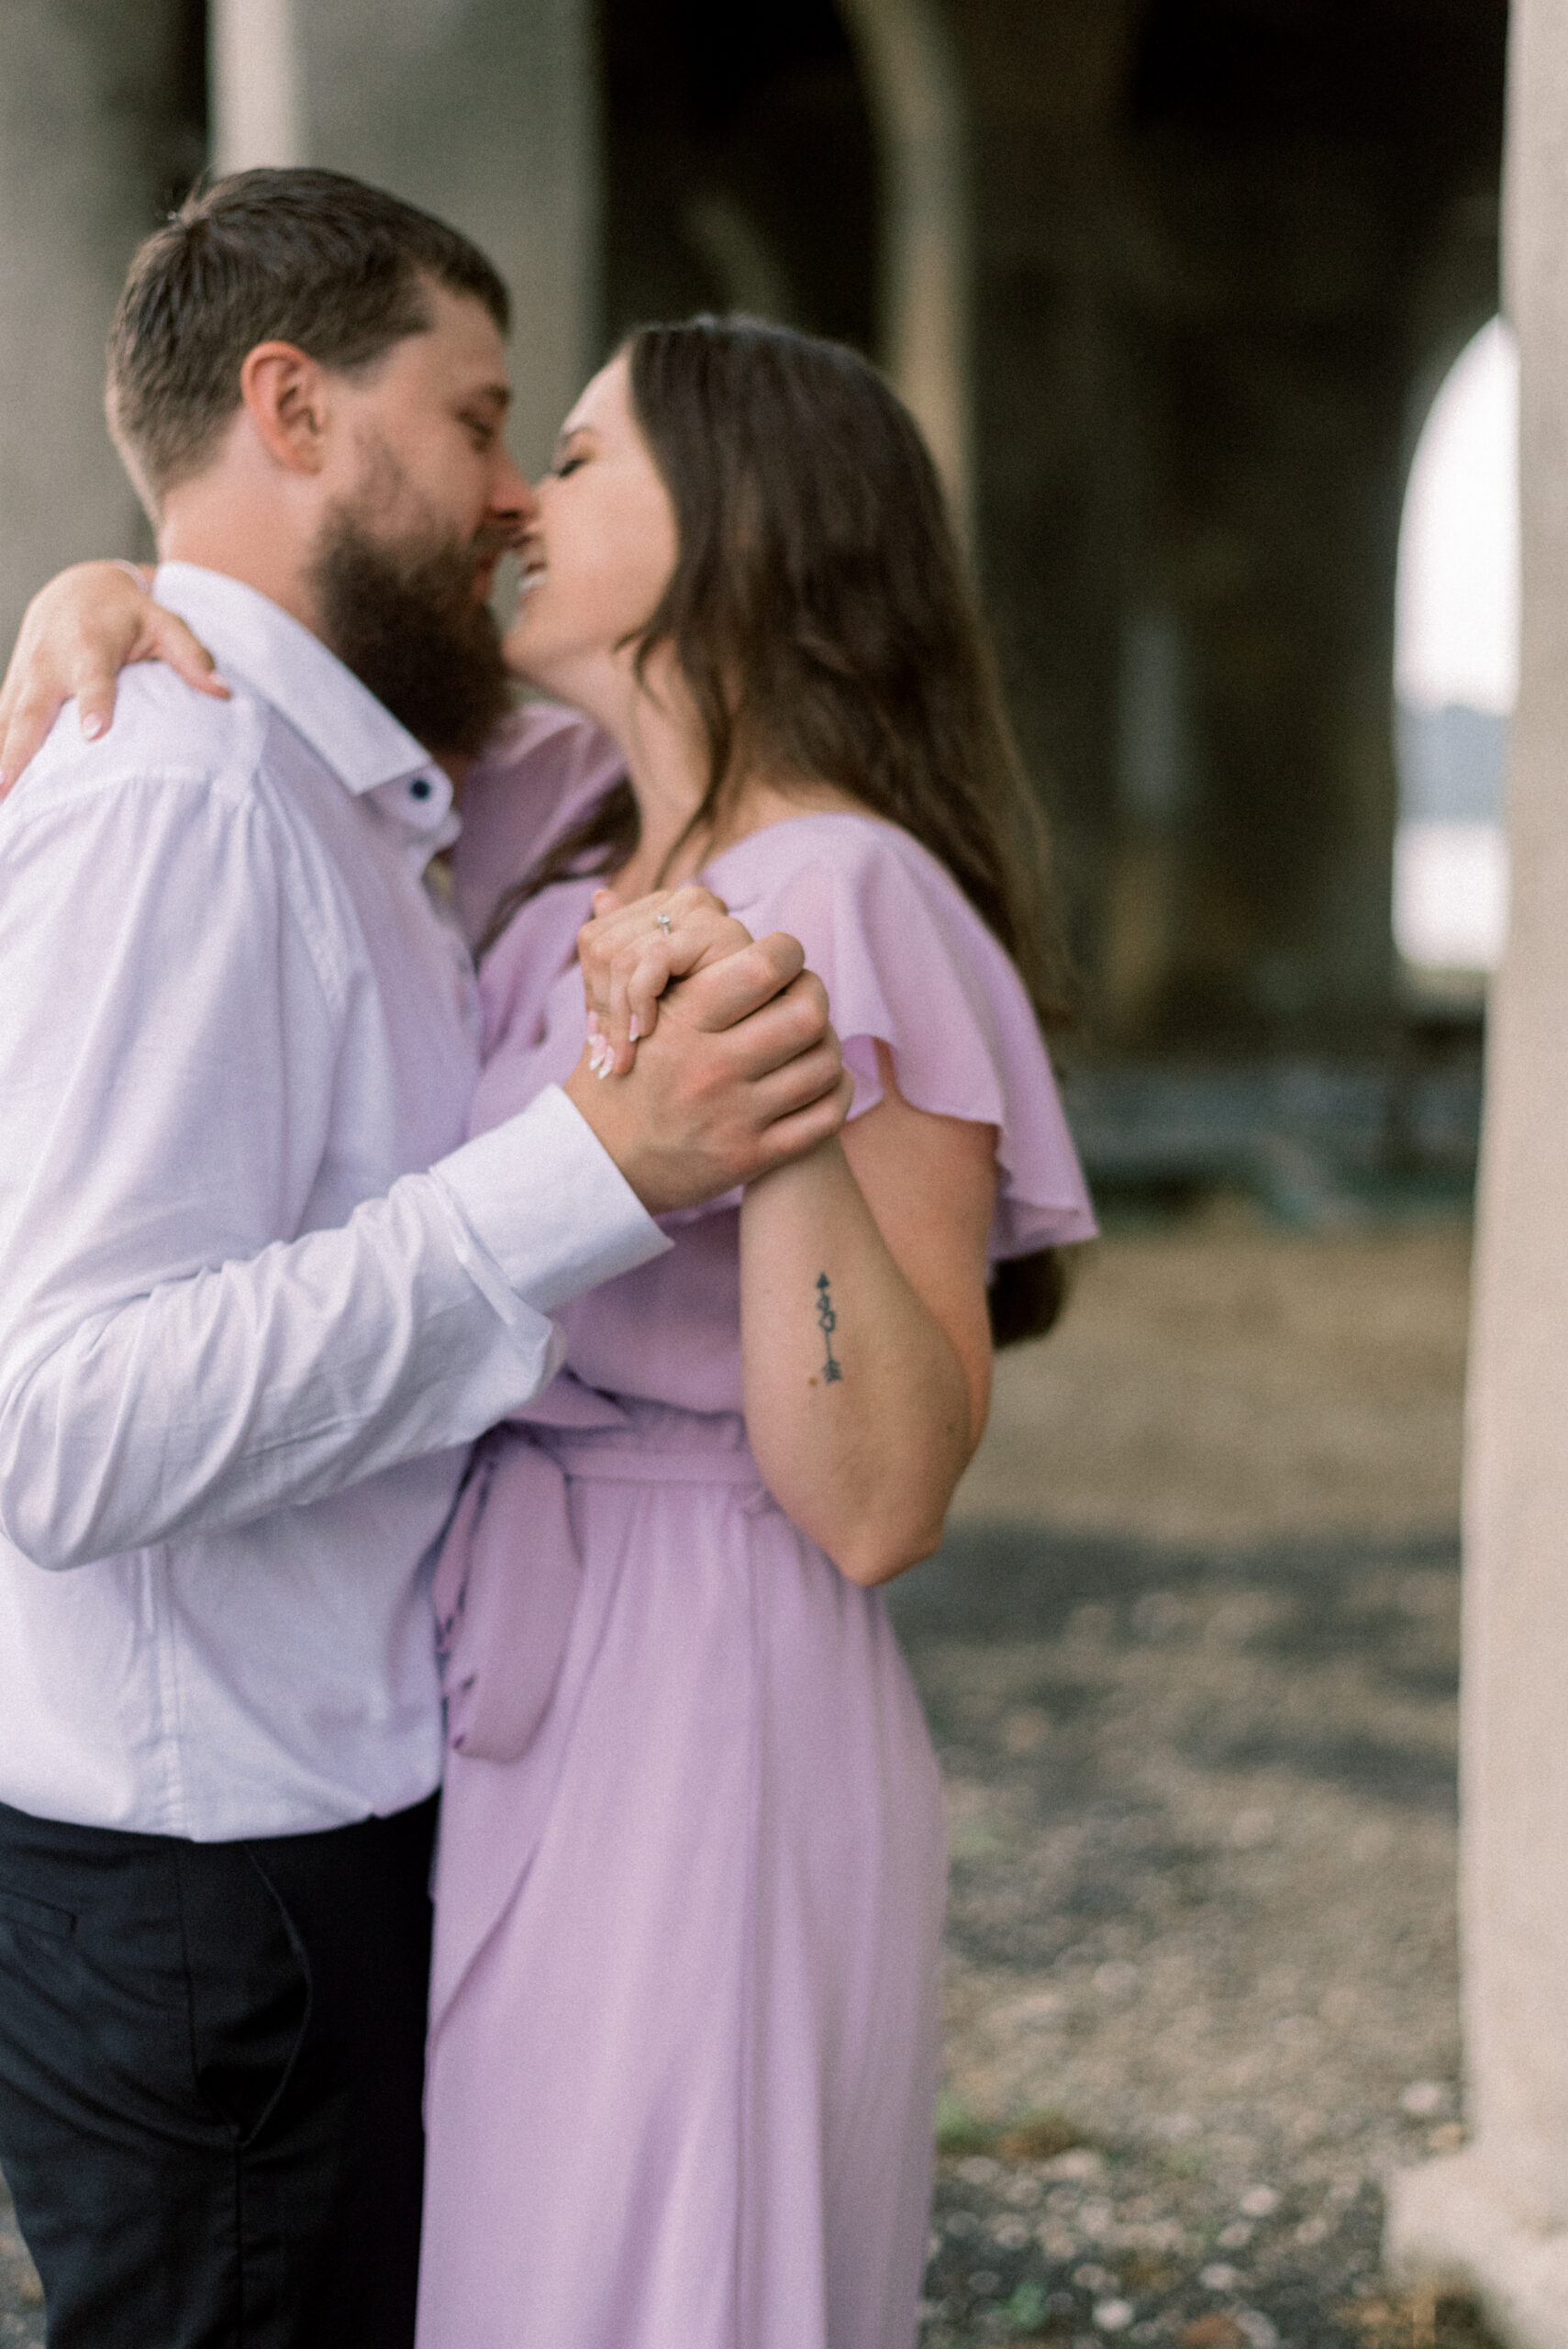 Pennsylvania wedding photographer captures couple embracing and dancing